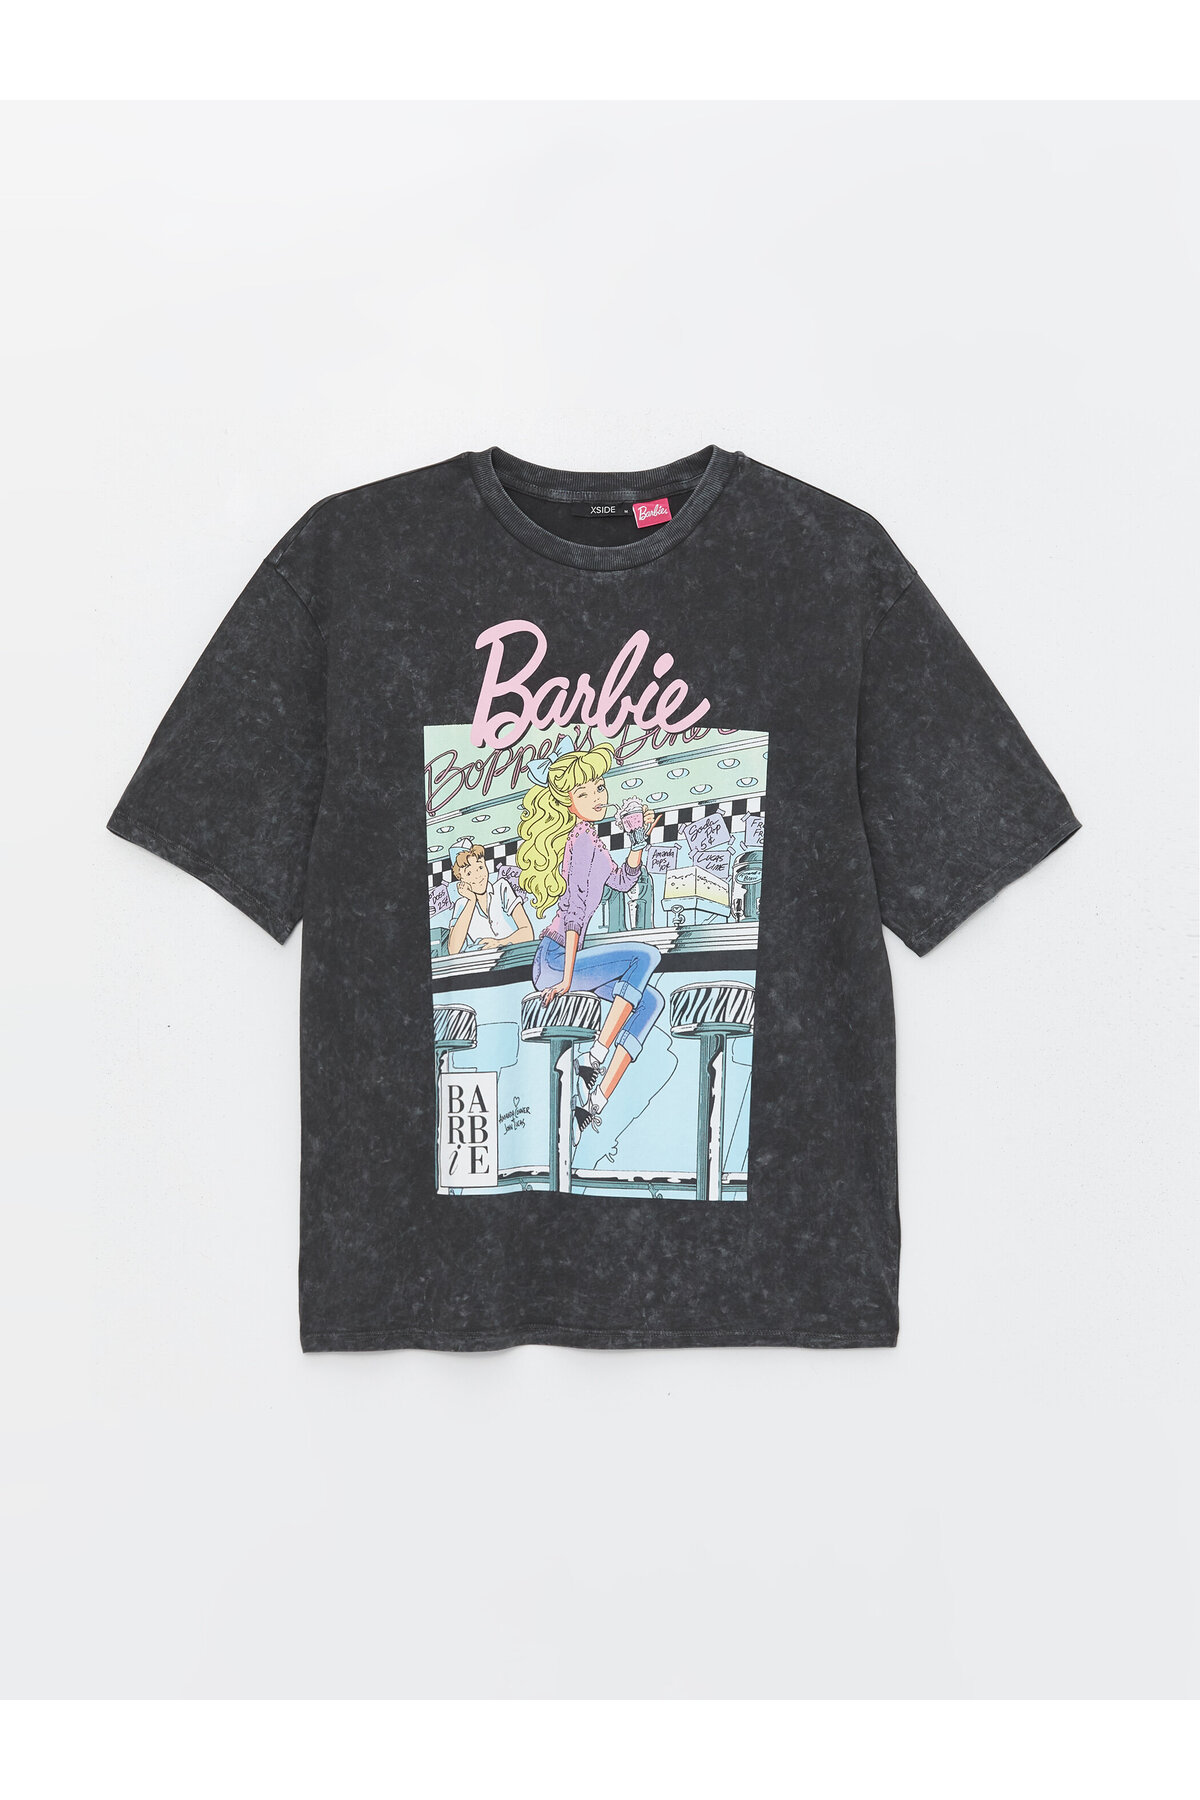 LC Waikiki Women's Crew Neck Barbie Printed Short Sleeve Oversize T-Shirt